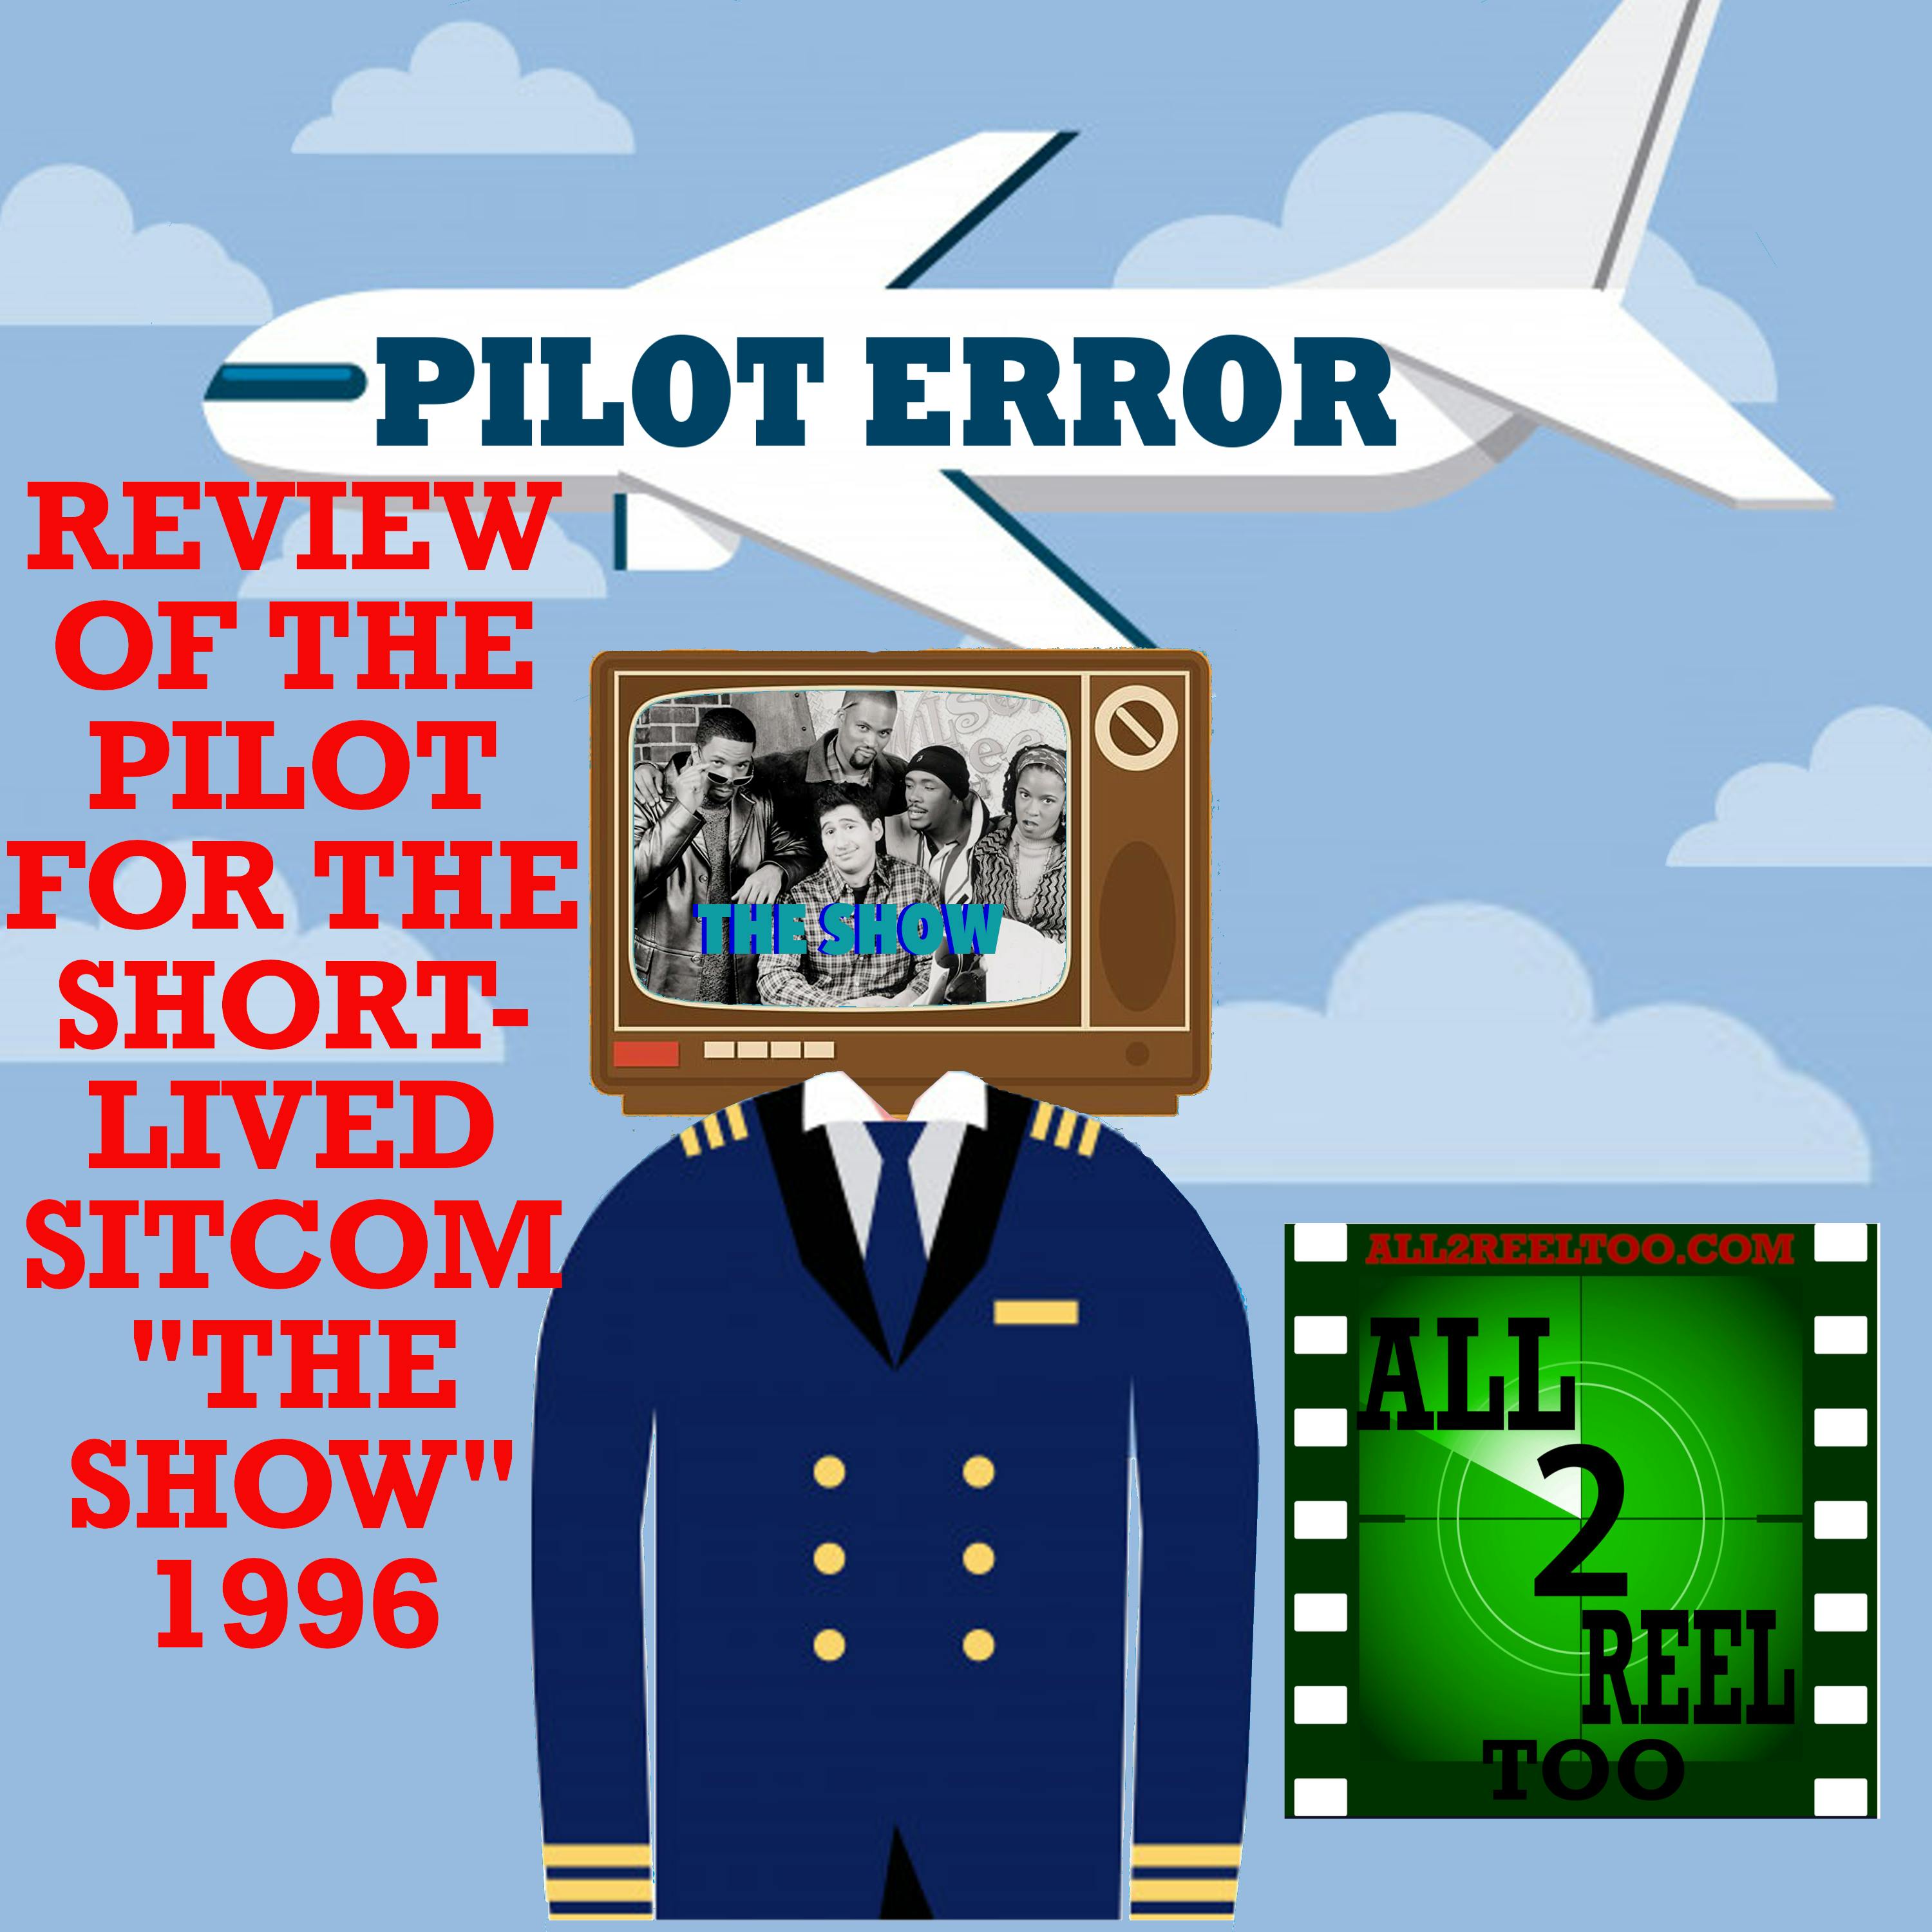 THE SHOW (1996) - PILOT ERROR REVIEW Image